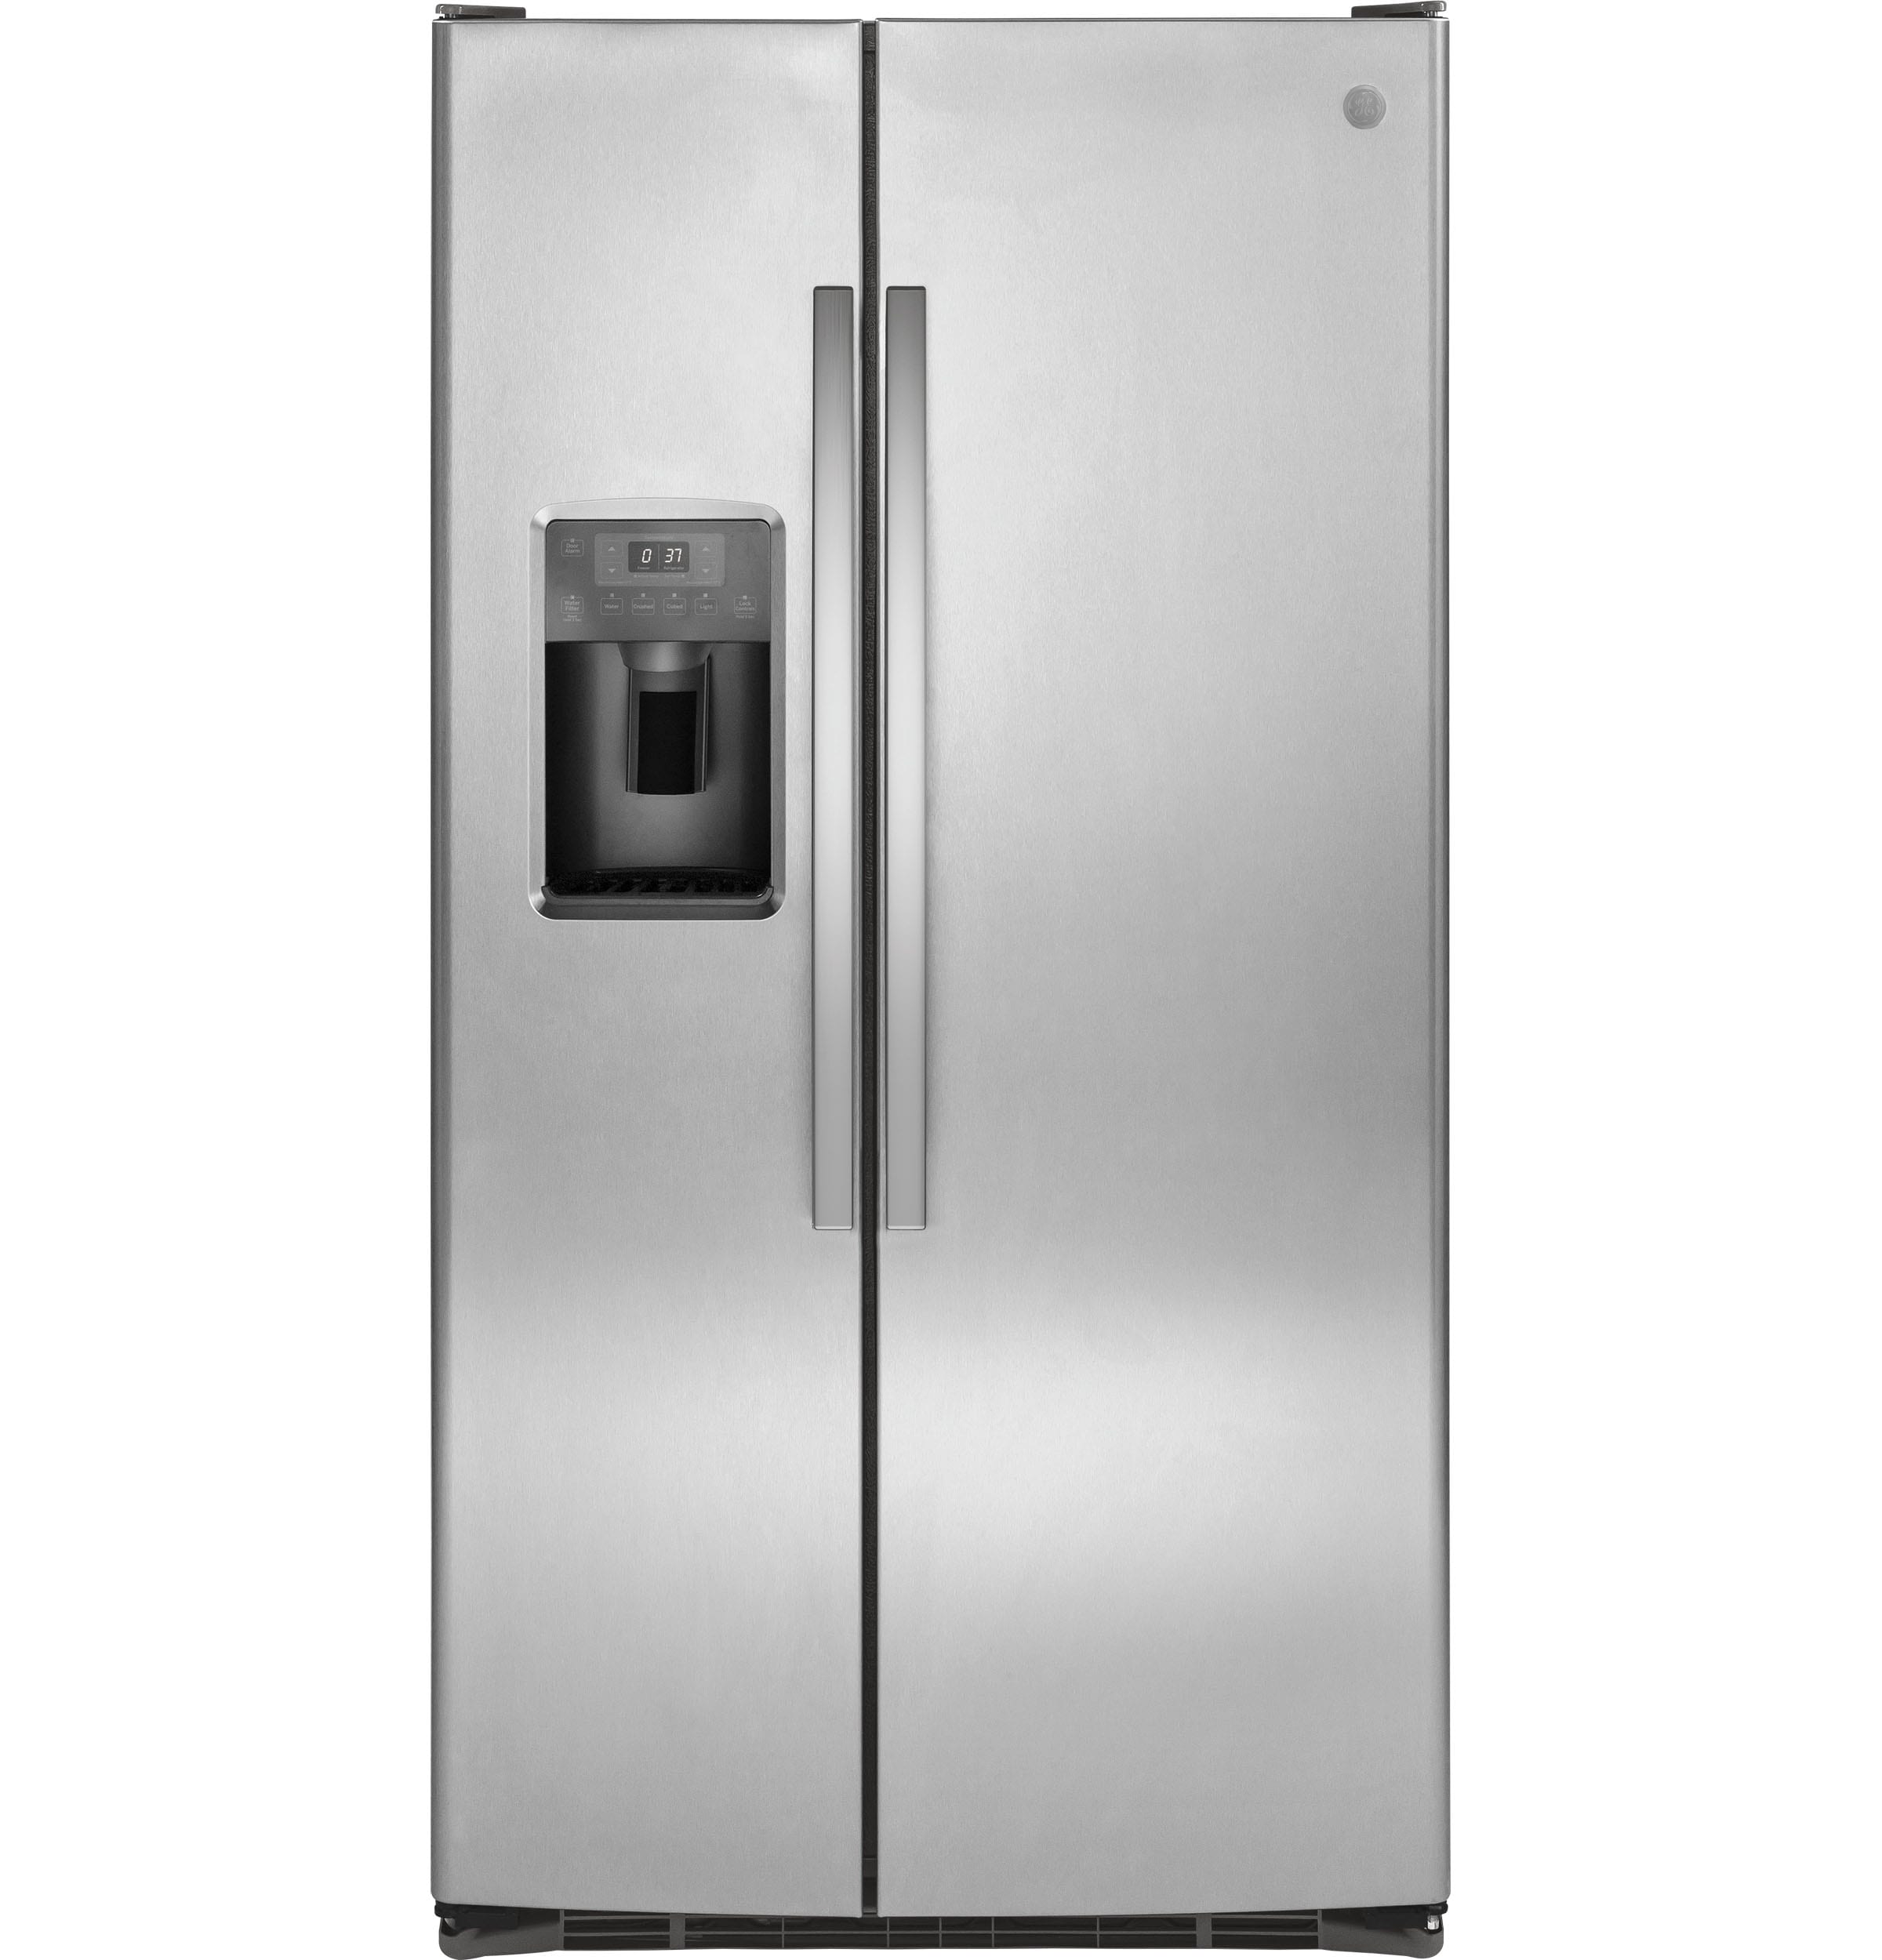 Ge 25 4 Cu Ft Side By Refrigerator